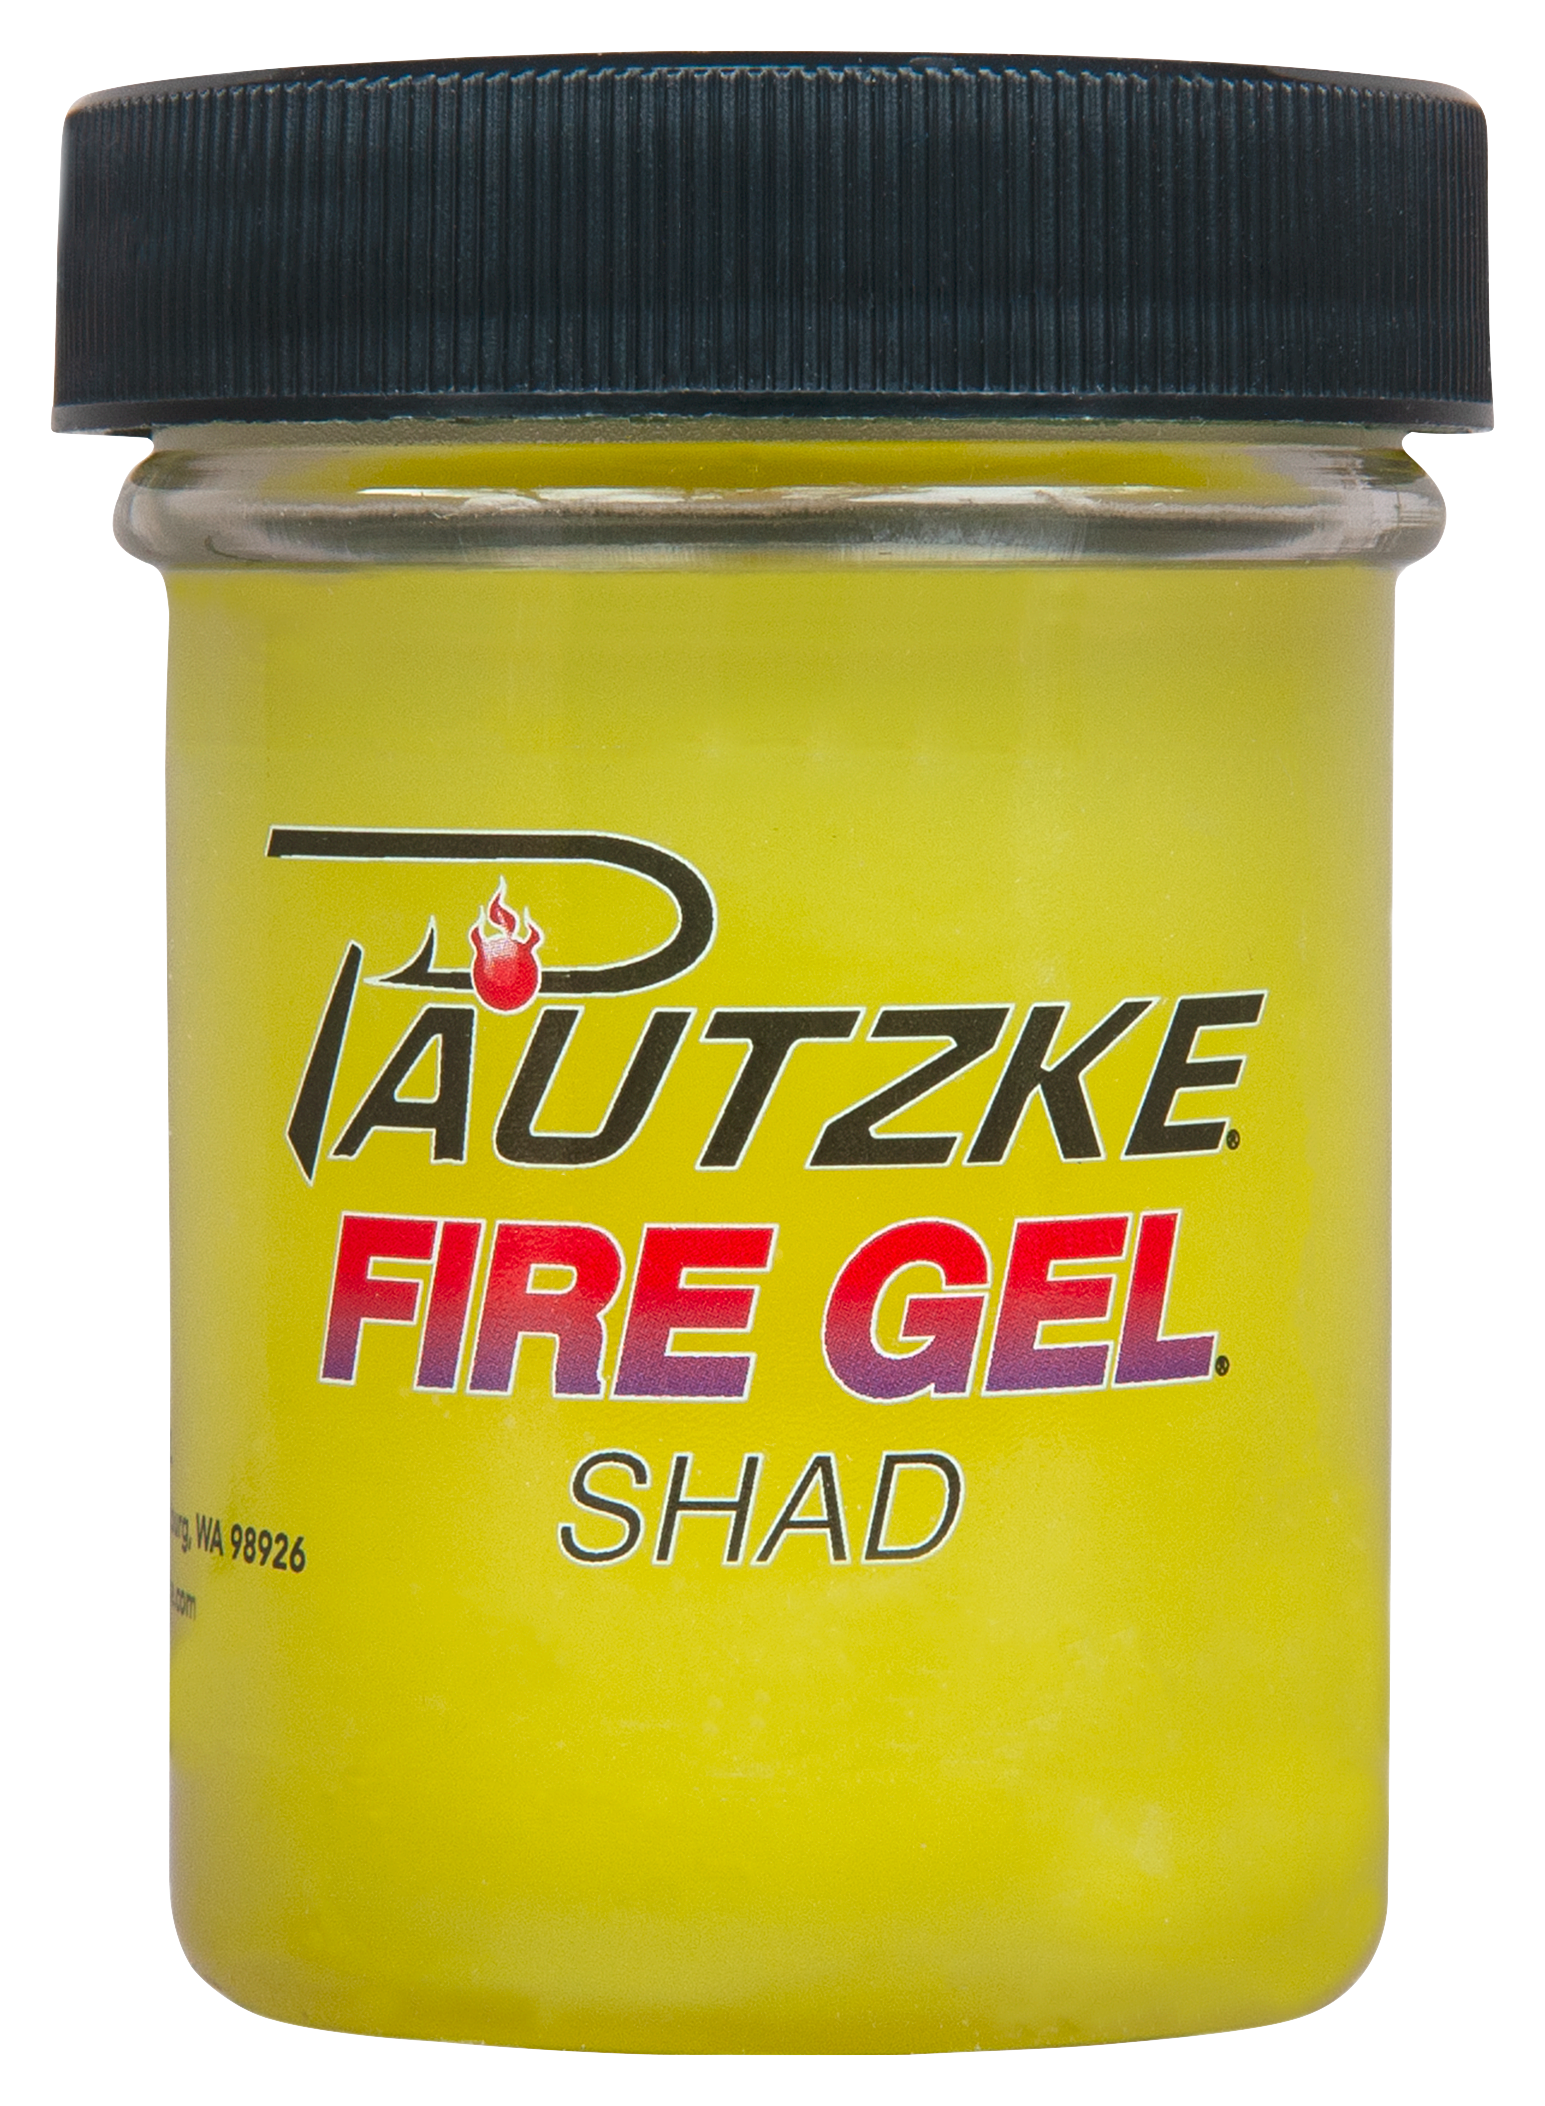 Pautzke Fire Gel 1.65oz Crawfish